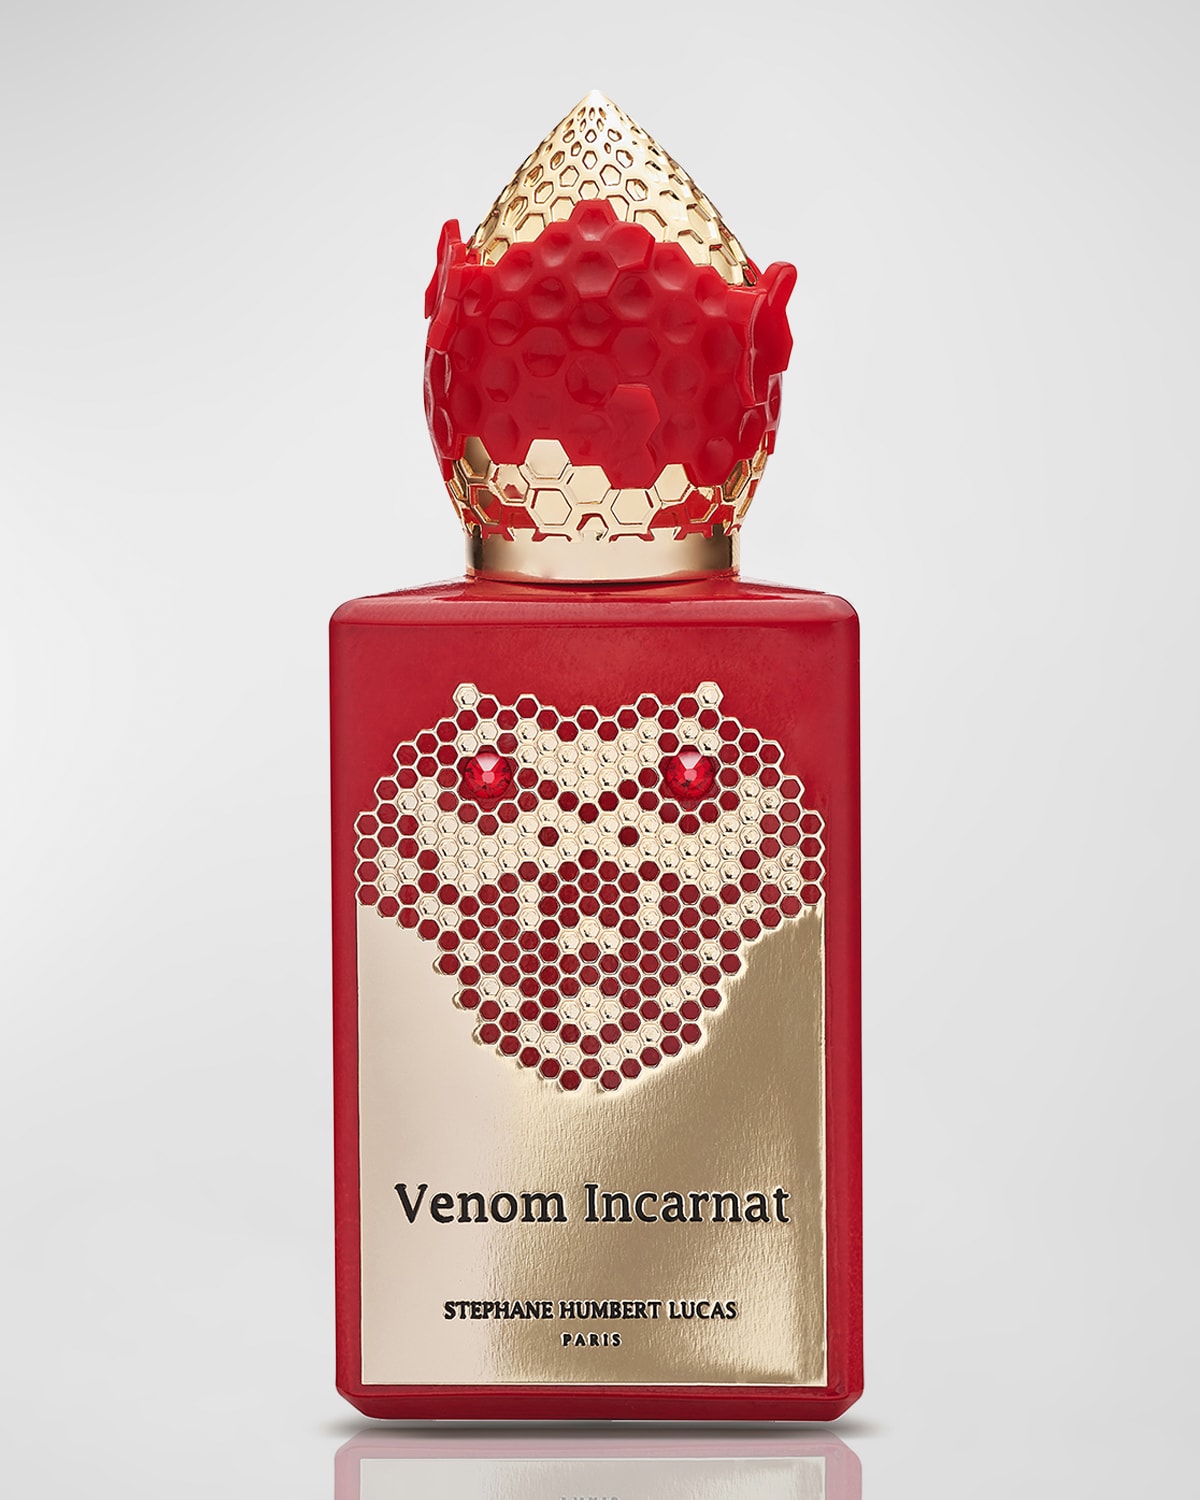 Venom Incarnat Eau de Parfum, 1.7 oz.